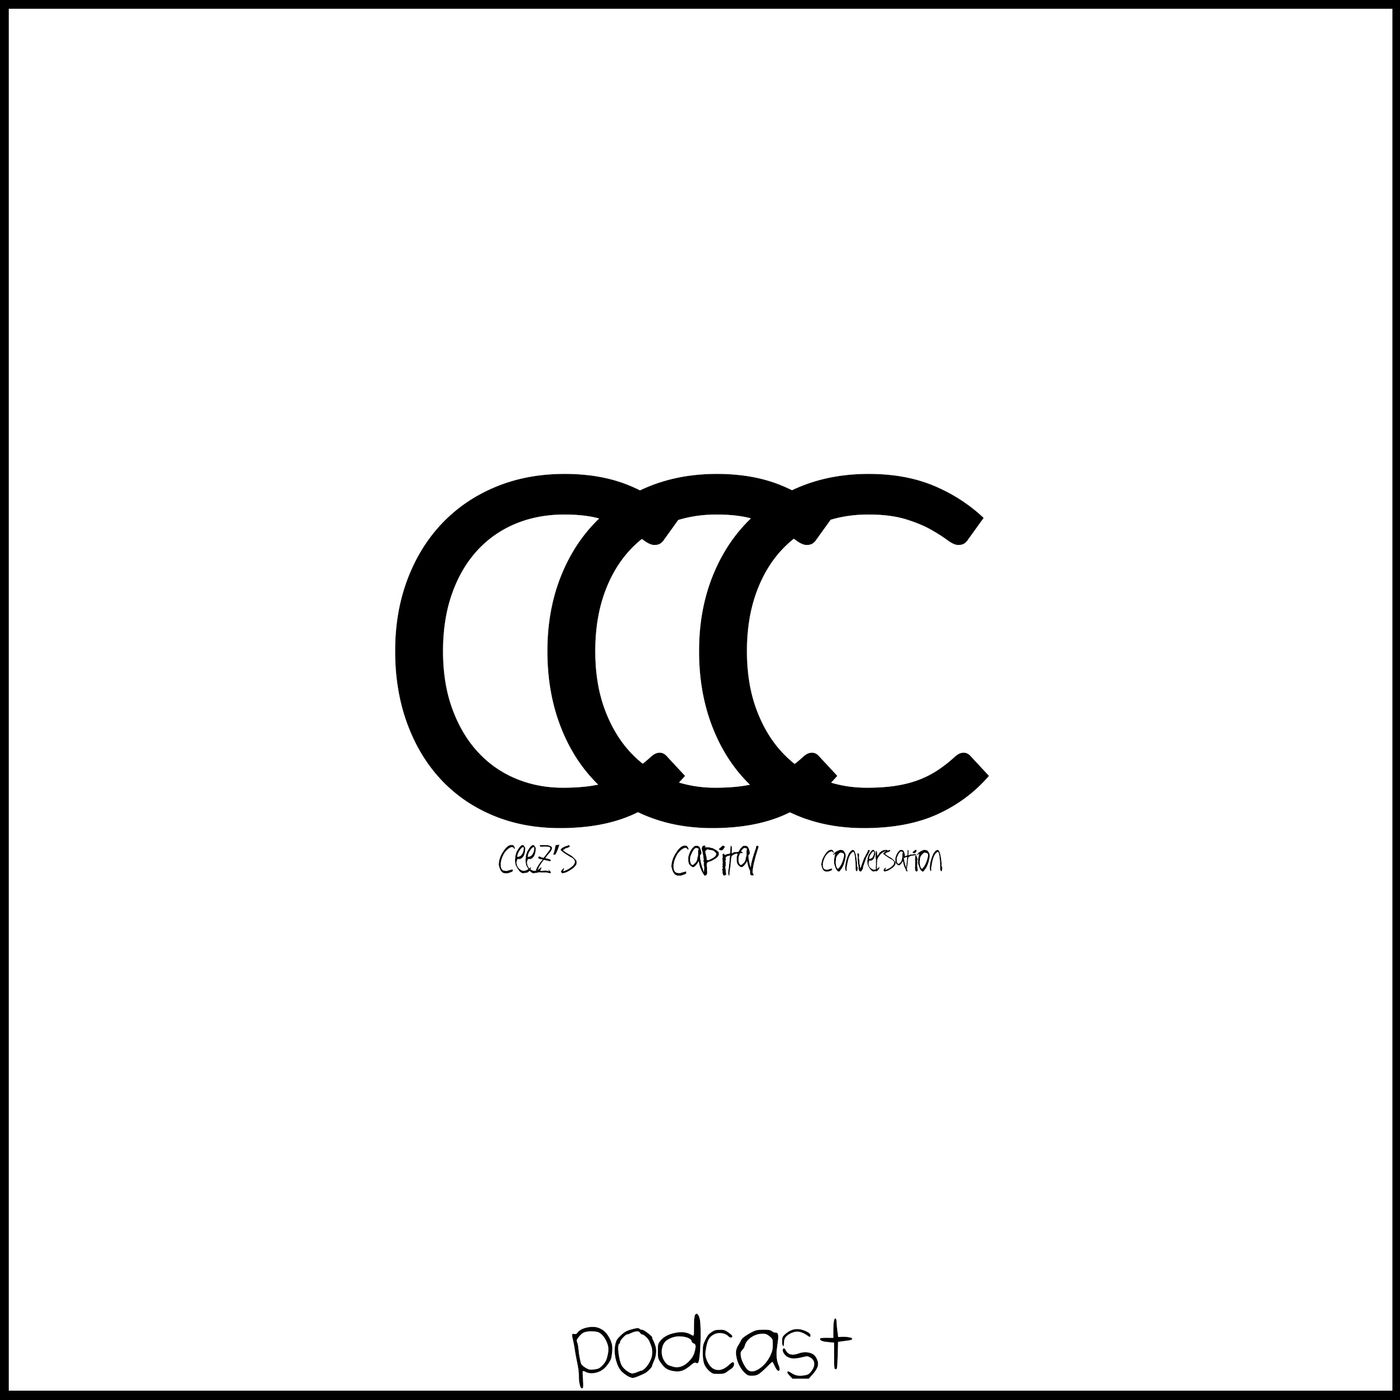 Cee’z Capital Conversations Podcast